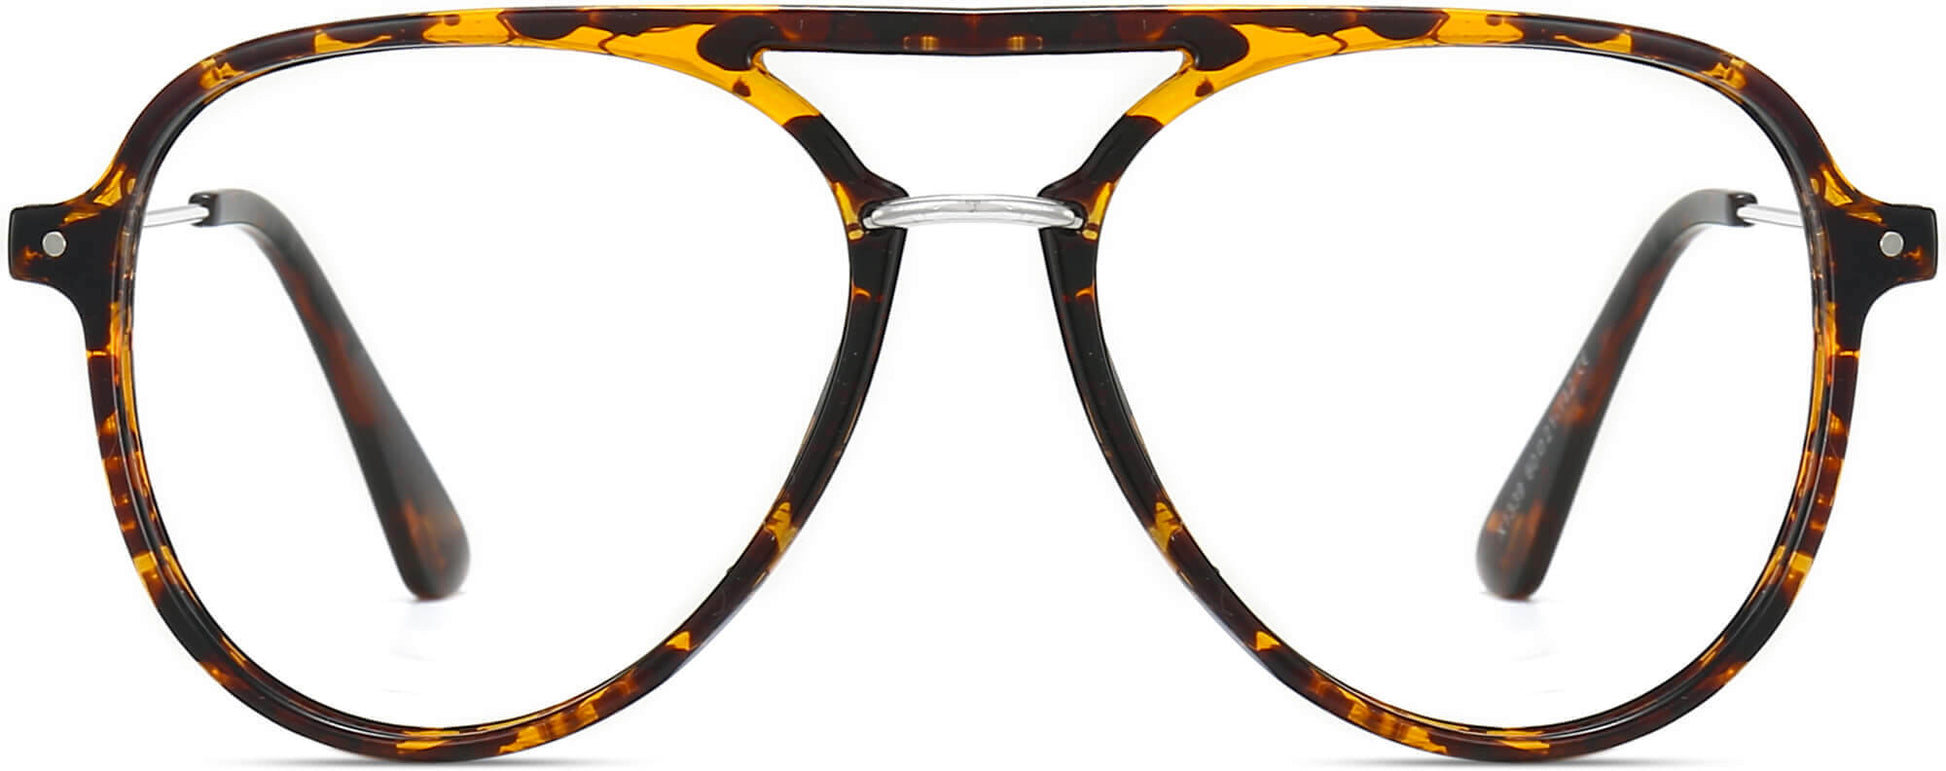 Marcus Aviator Tortoise Eyeglasses from ANRRI, front view